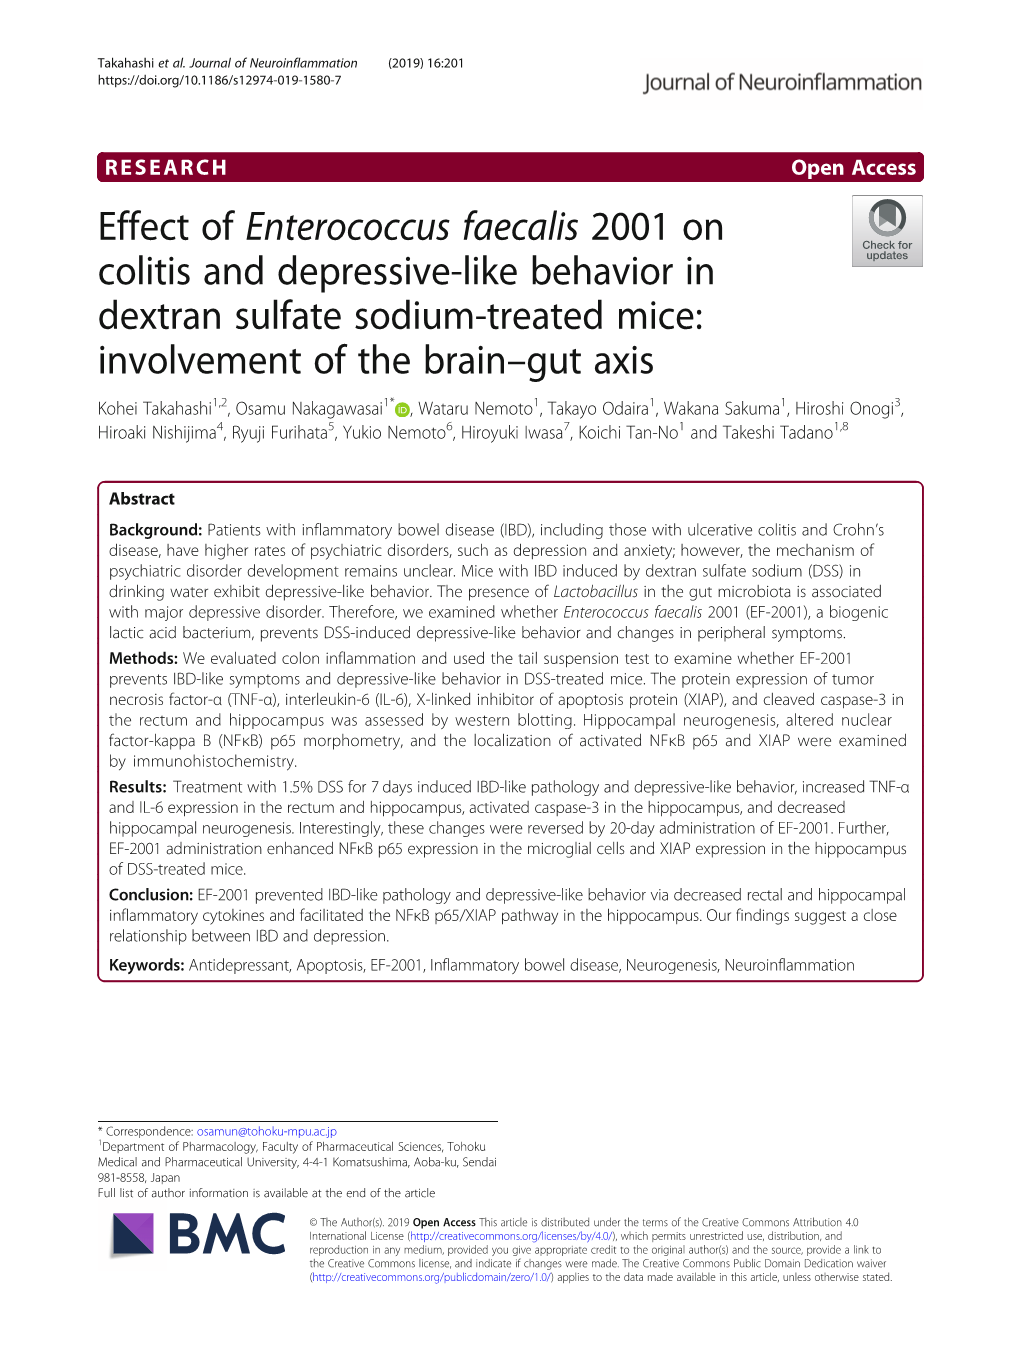 Effect of Enterococcus Faecalis 2001 on Colitis and Depressive-Like Behavior in Dextran Sulfate Sodium-Treated Mice: Involvement